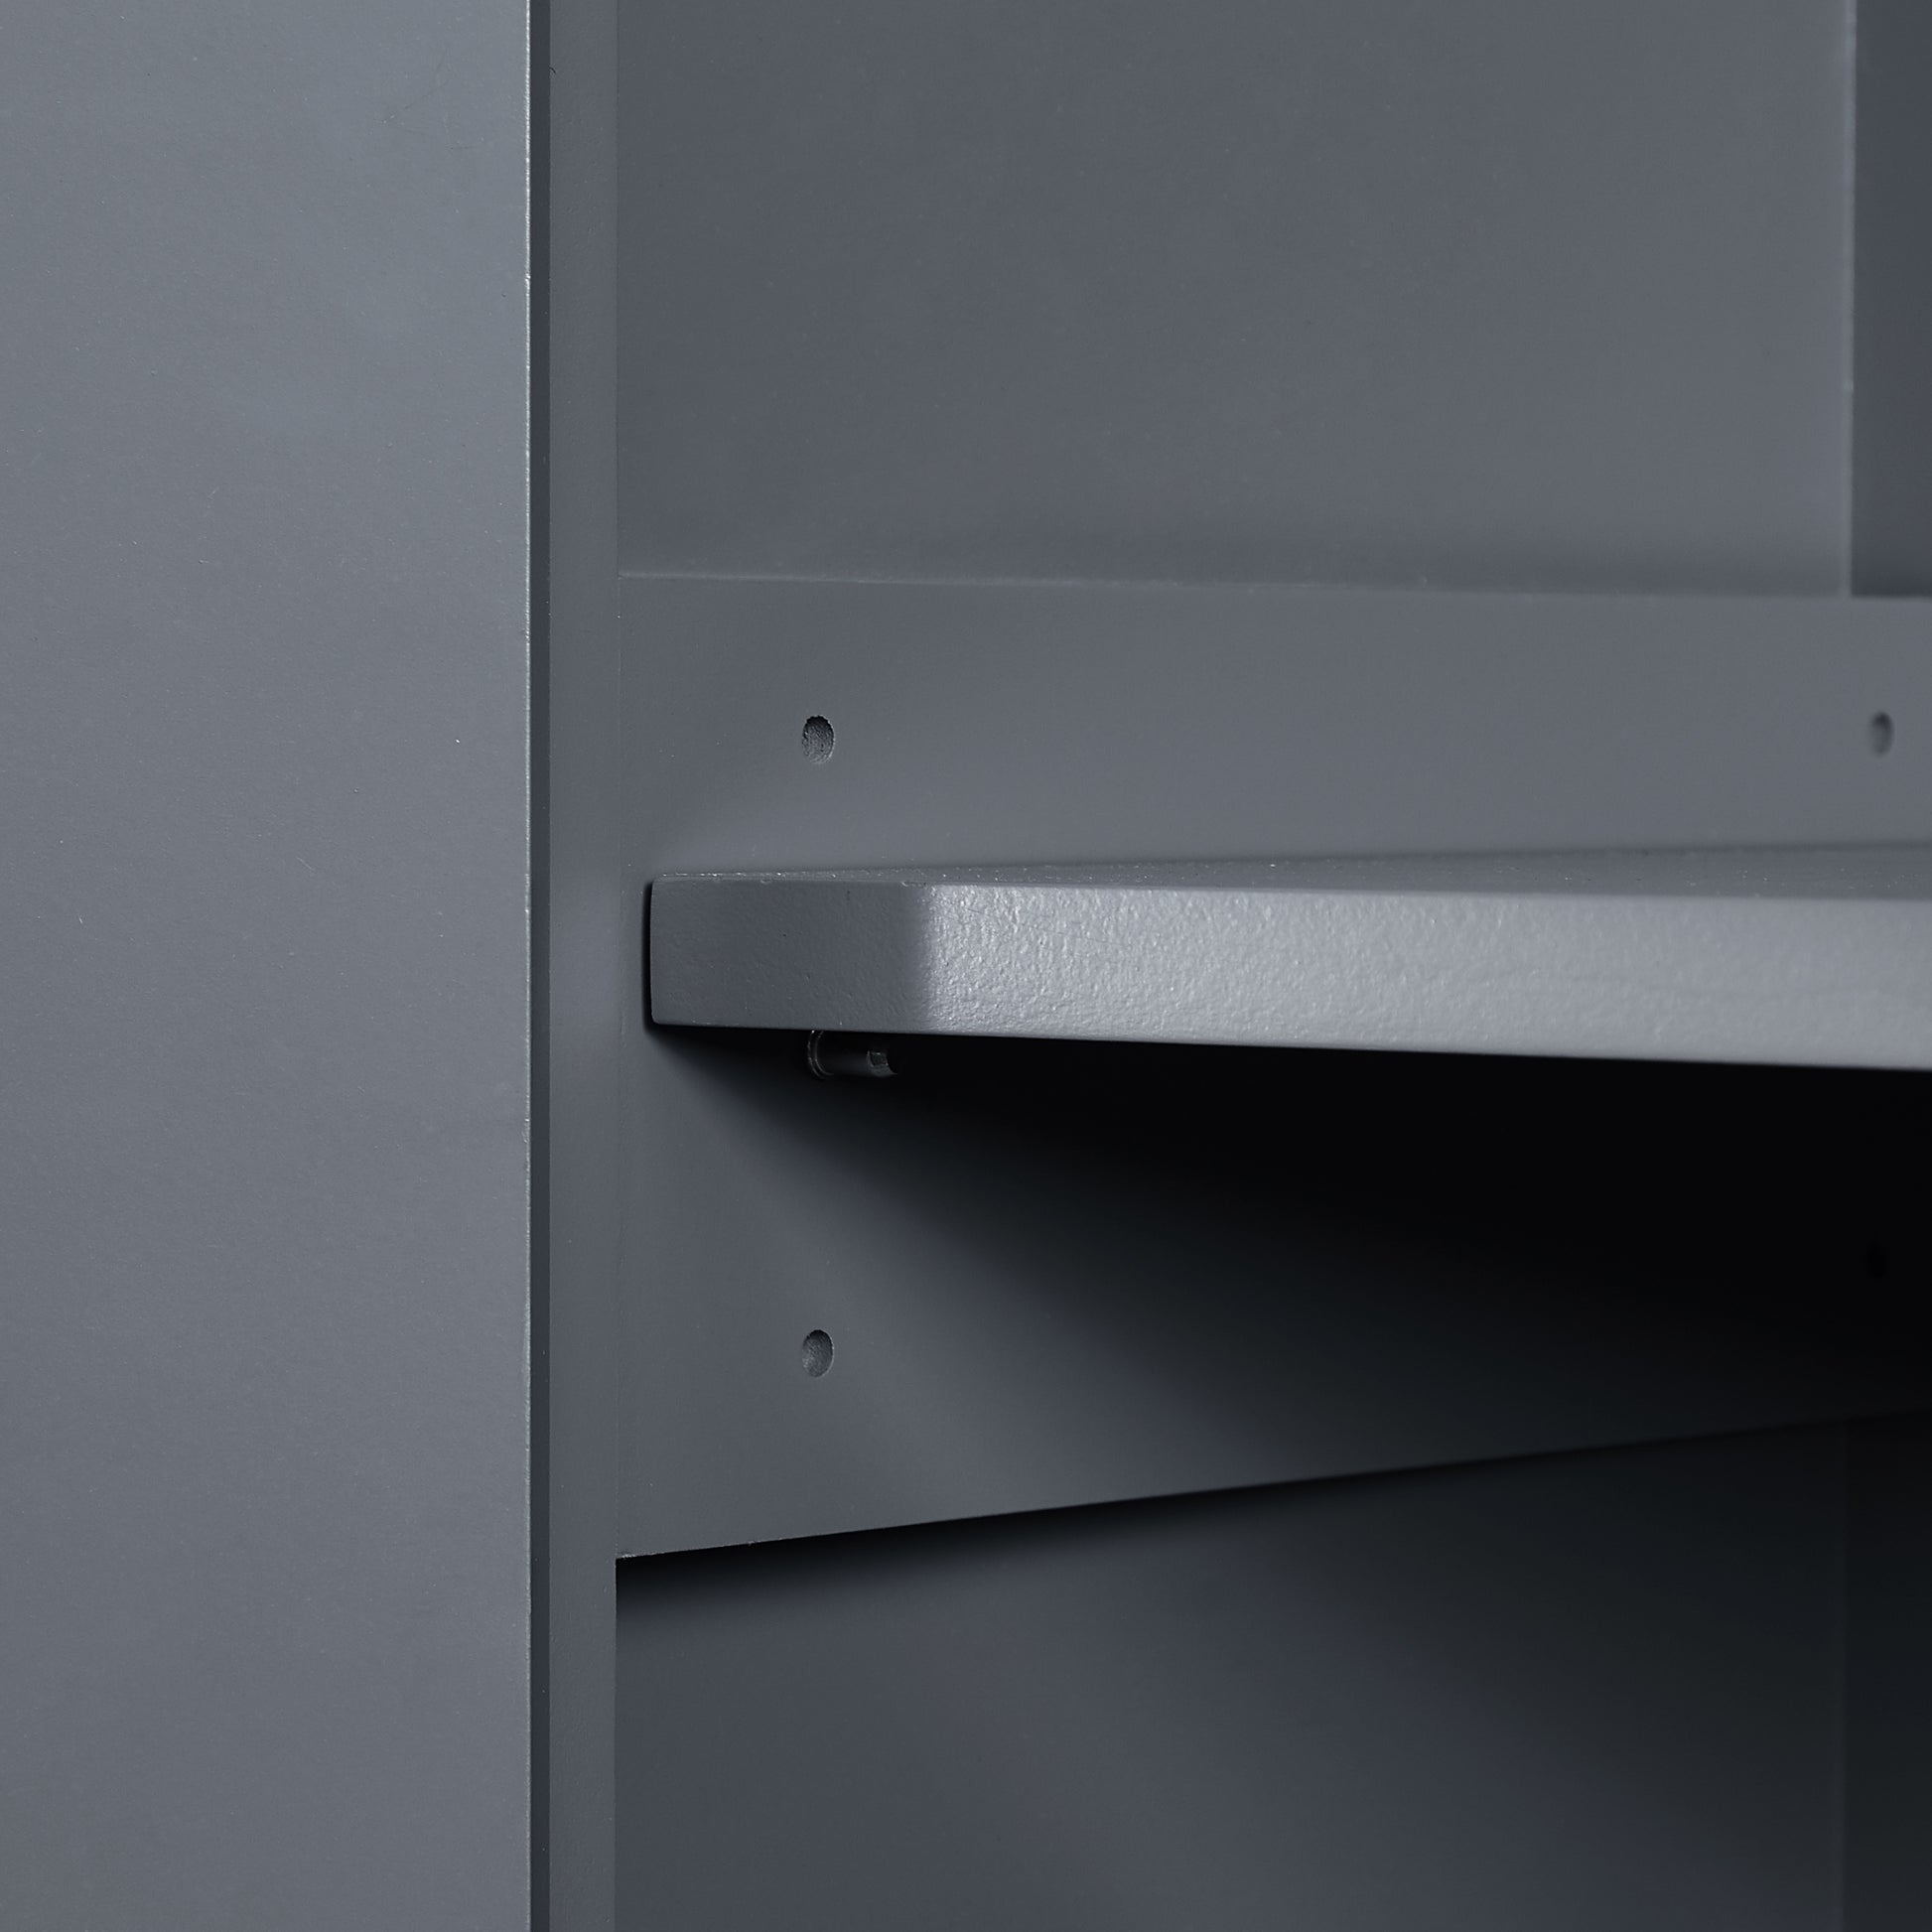 Bathroom Storage Cabinet, Tall Storage Cabinet with grey-mdf